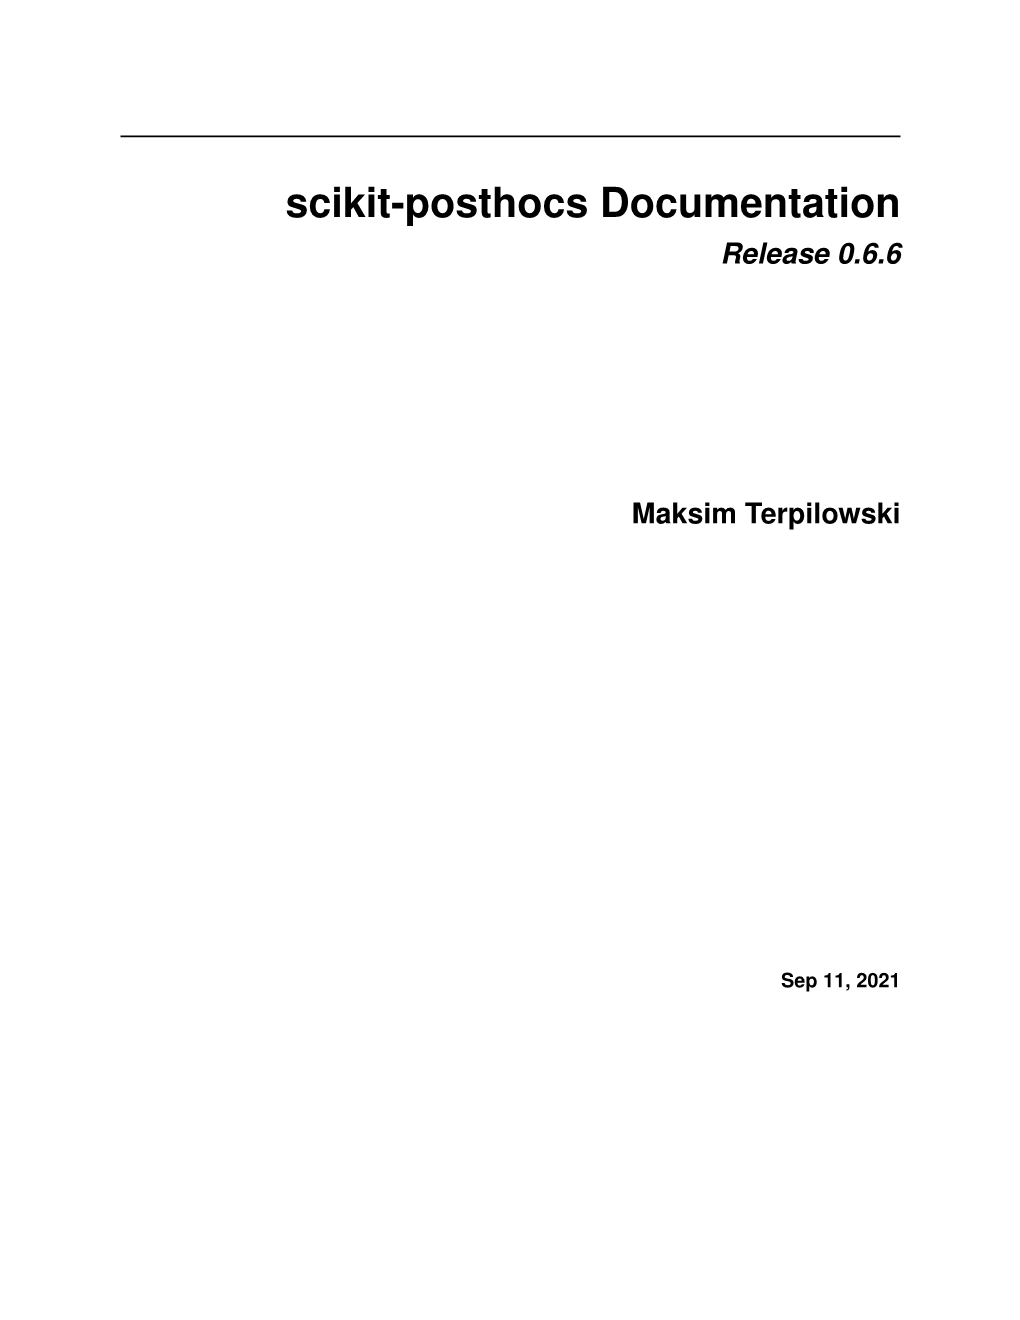 Scikit-Posthocs Documentation Release 0.6.6